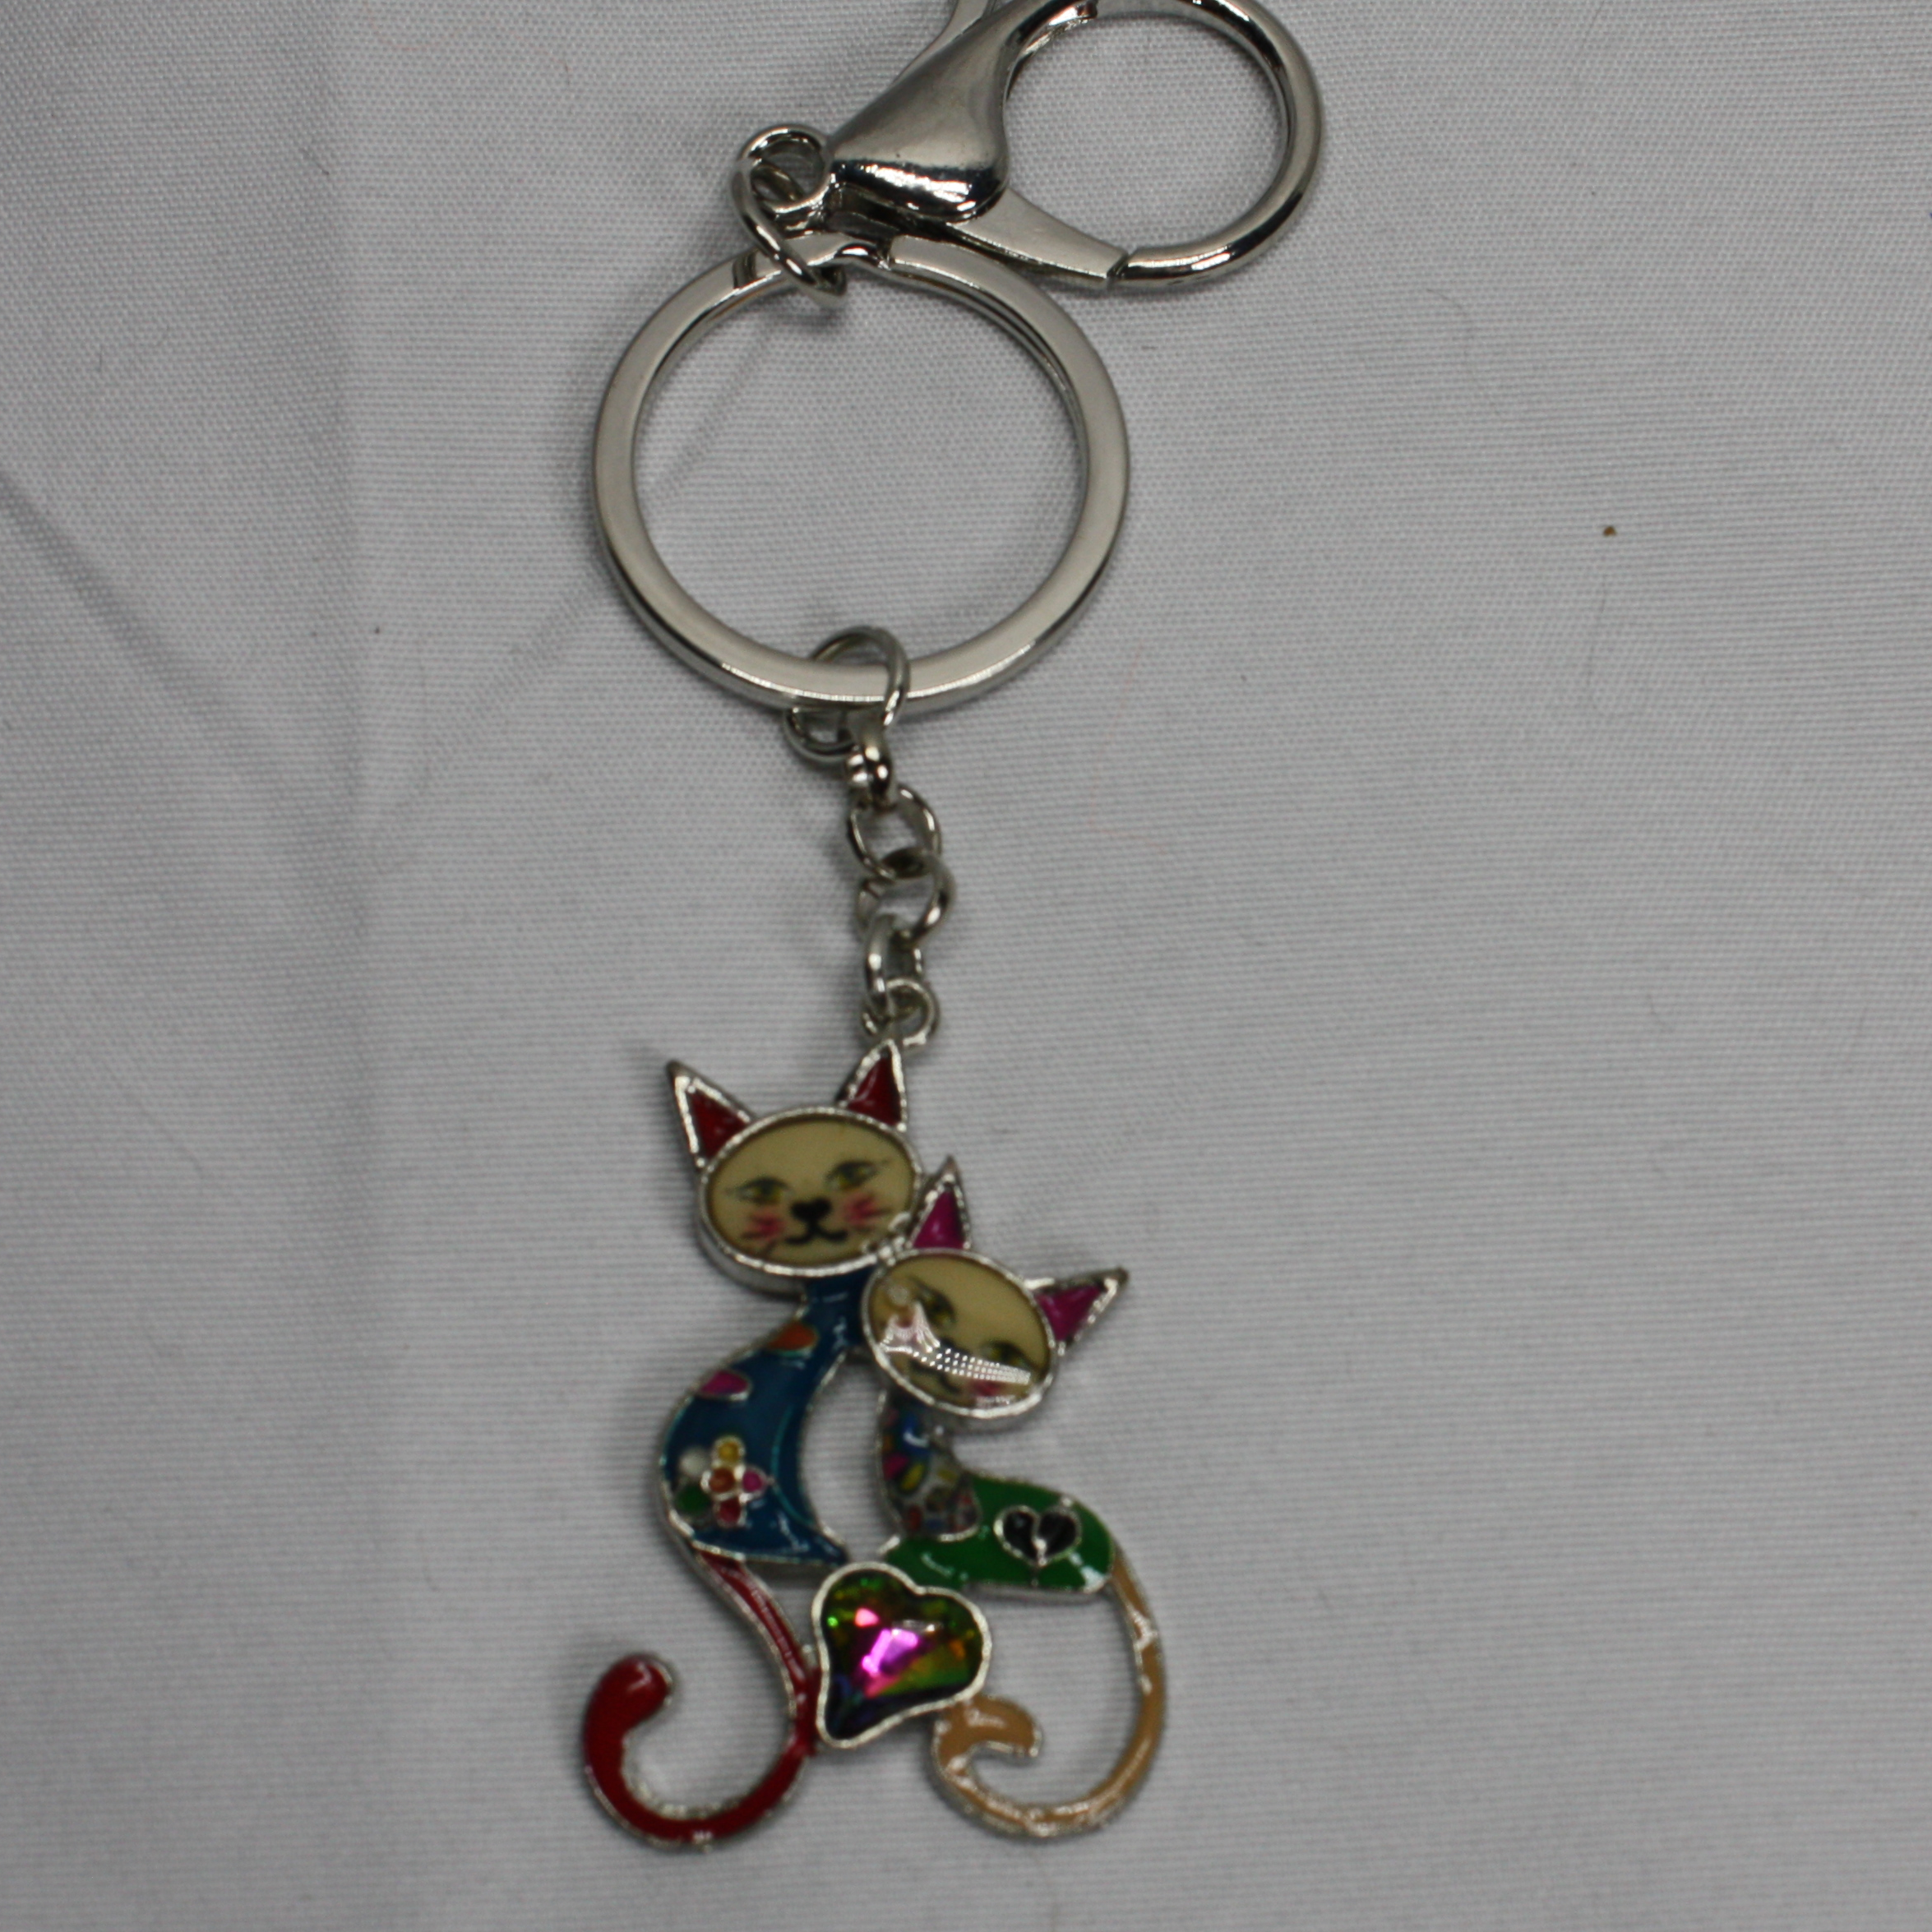 Two cat key chain